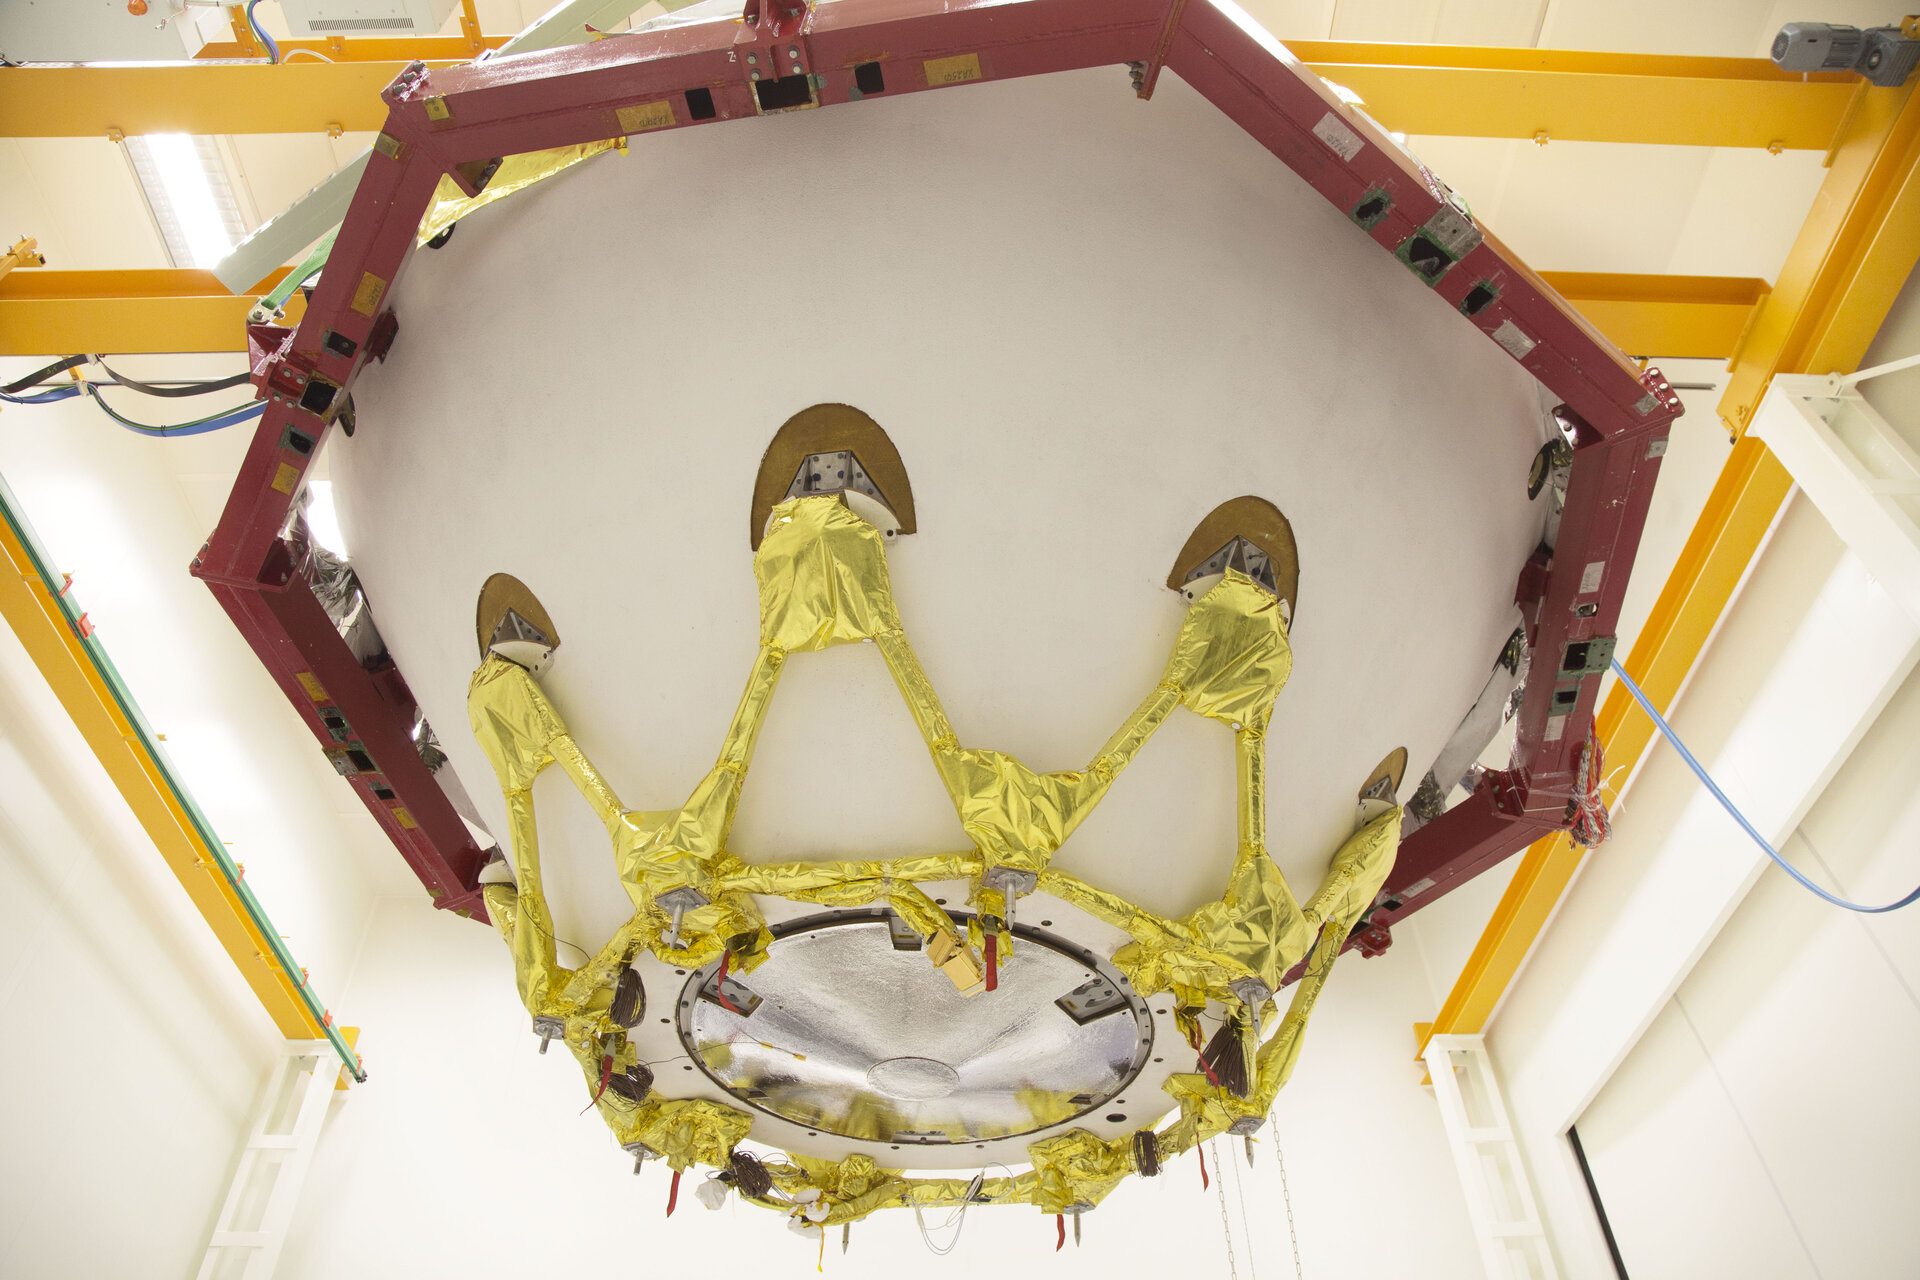 ExoMars descent module 